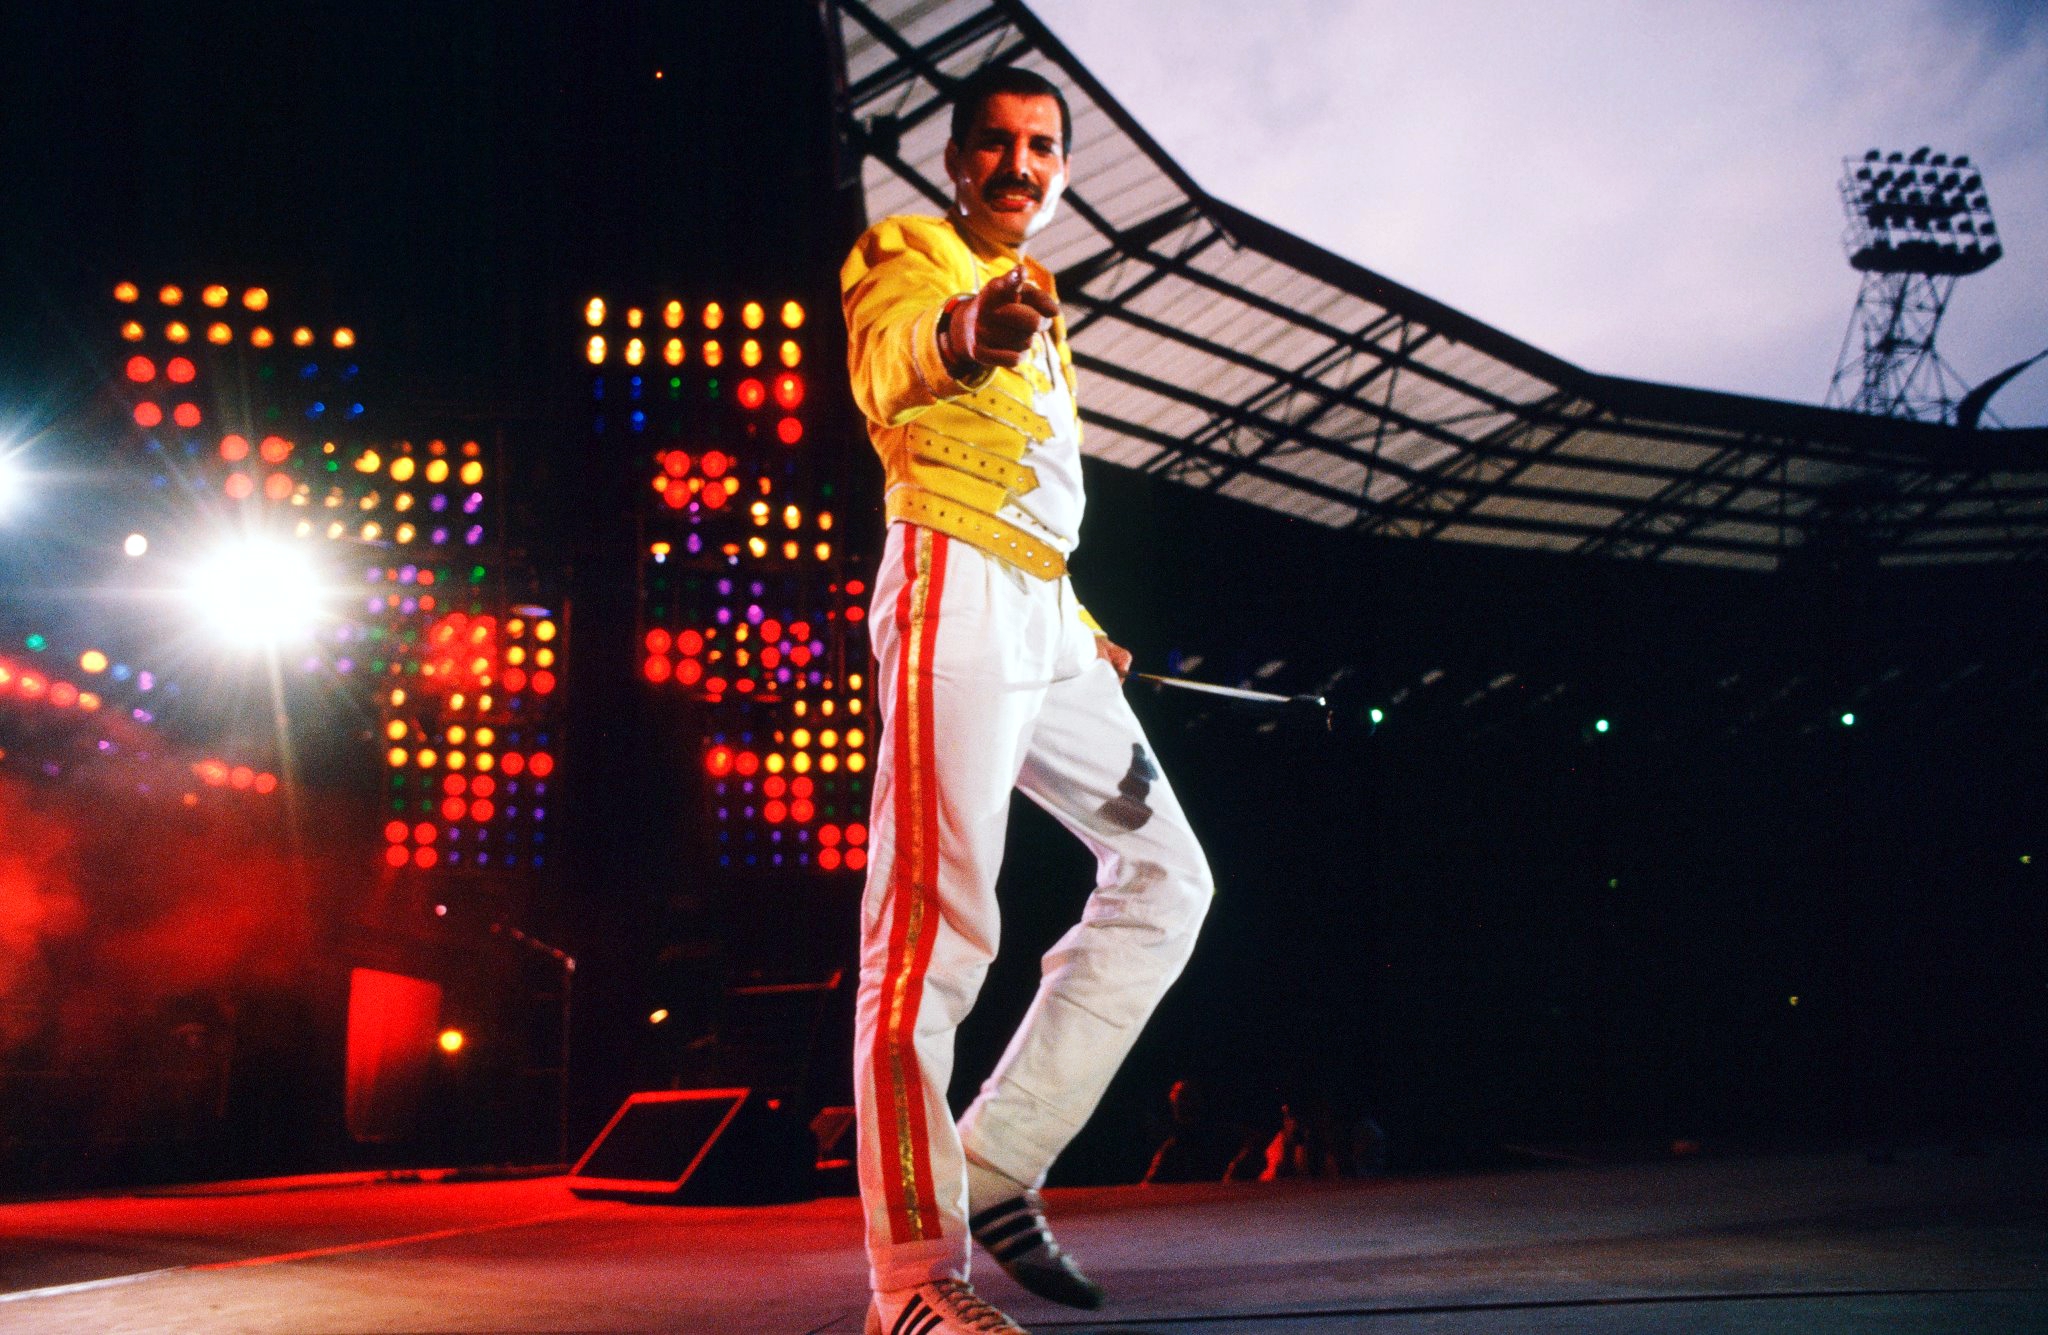 Стадион уэмбли 1986. Freddie Mercury. Фредди Меркьюри Уэмбли. Queen Уэмбли 1986. Группа Квин Фредди Меркьюри.